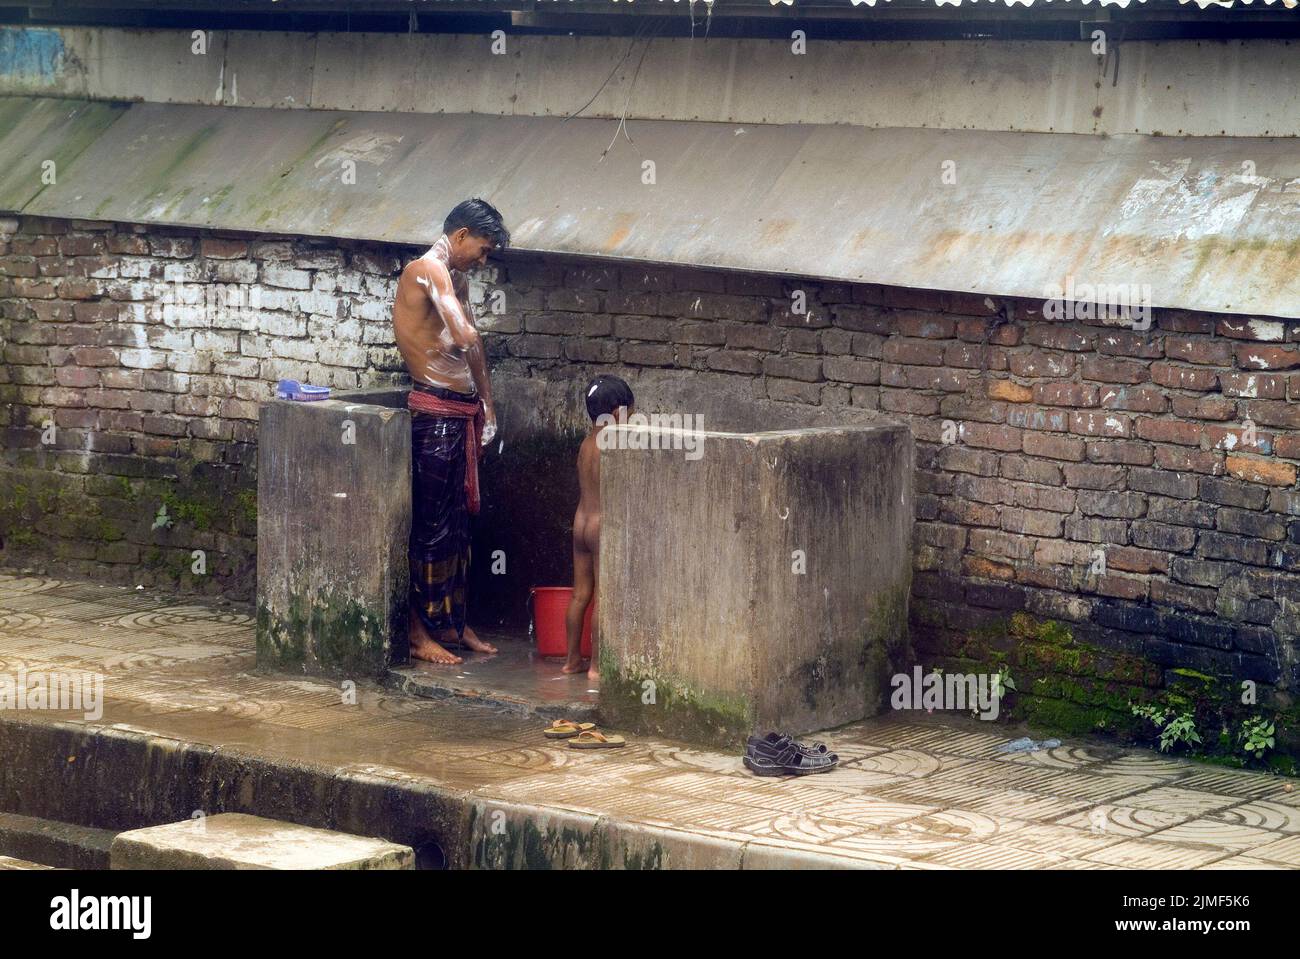 Dhaka, Bangladesh - September 17, 2007: Unidentified people on public washing place used by the poorer population Stock Photo